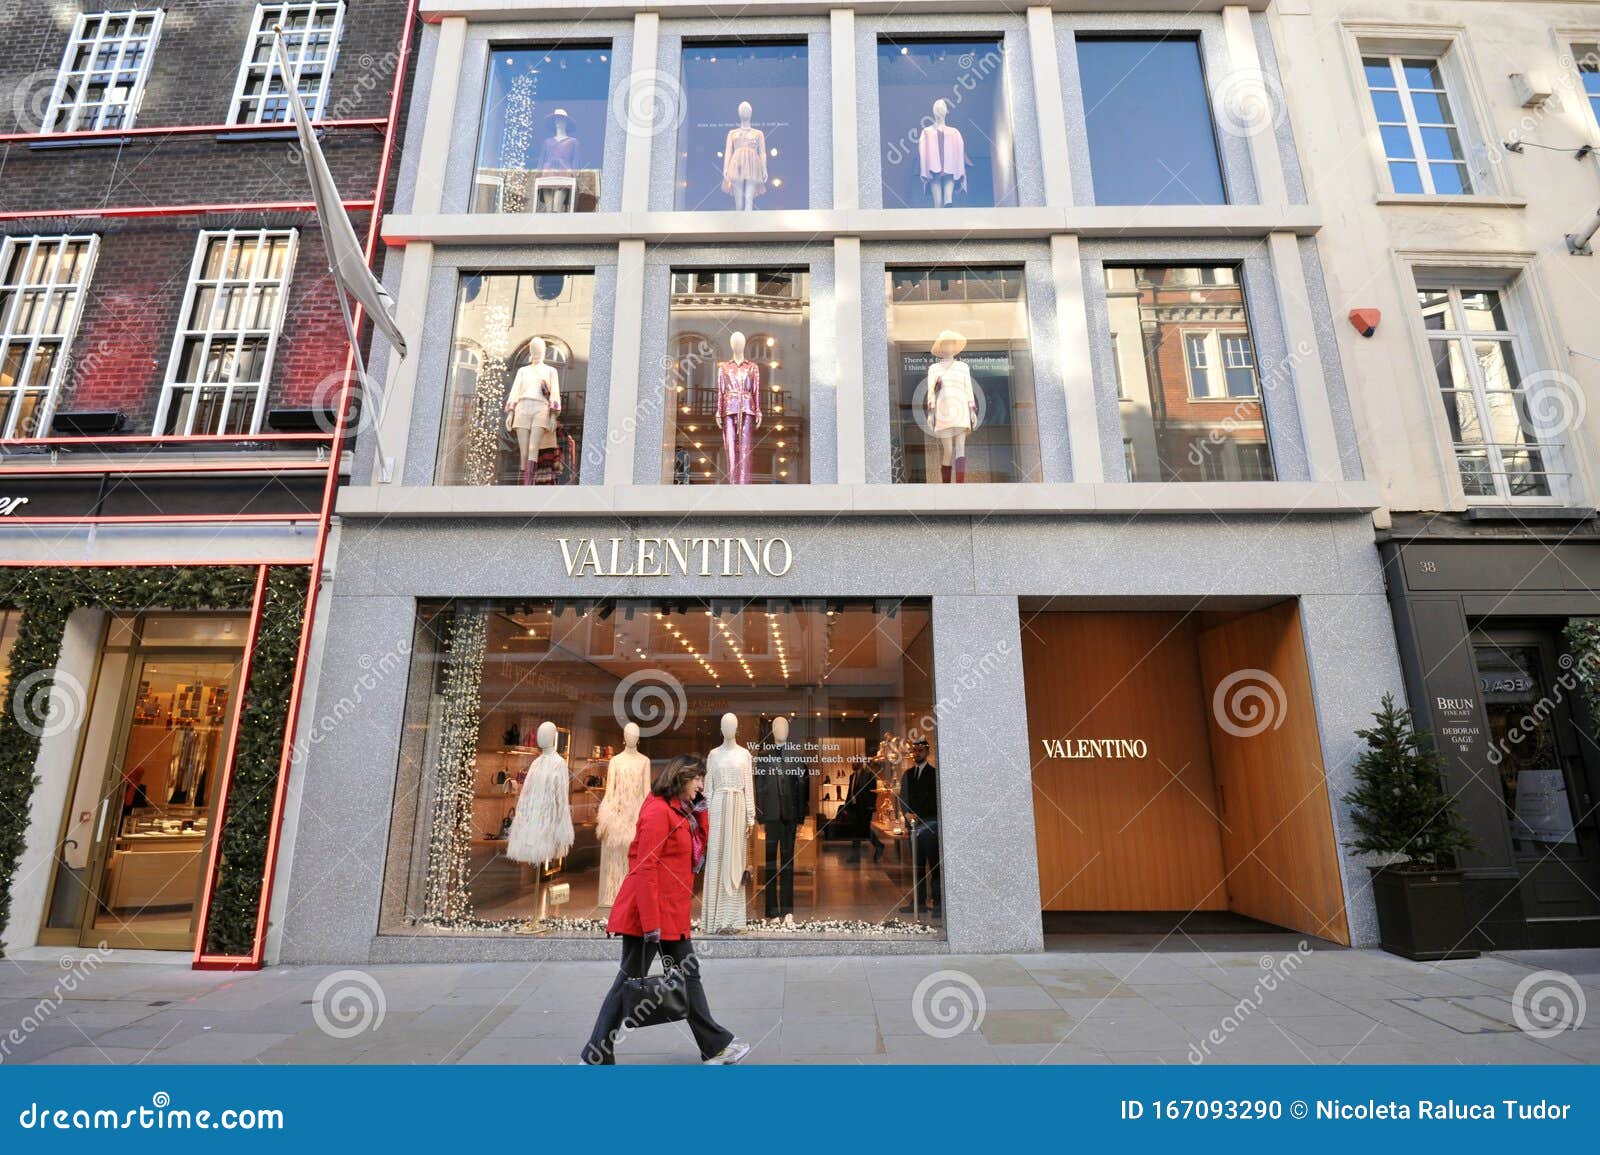 Valentino Luxury Fashion Shop in London, England Editorial Image ...